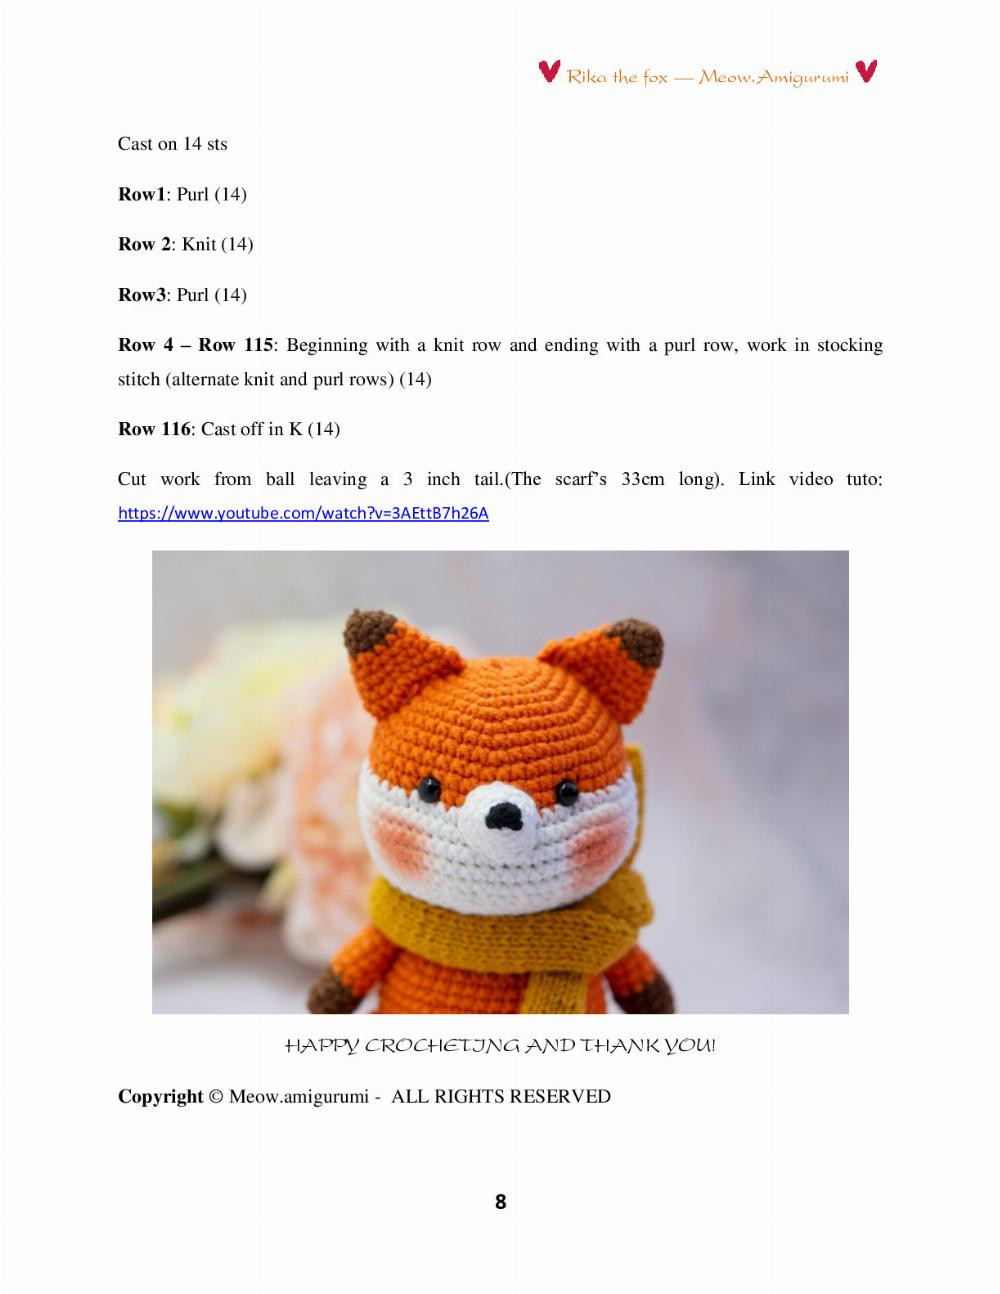 Rika the fox crochet pattern